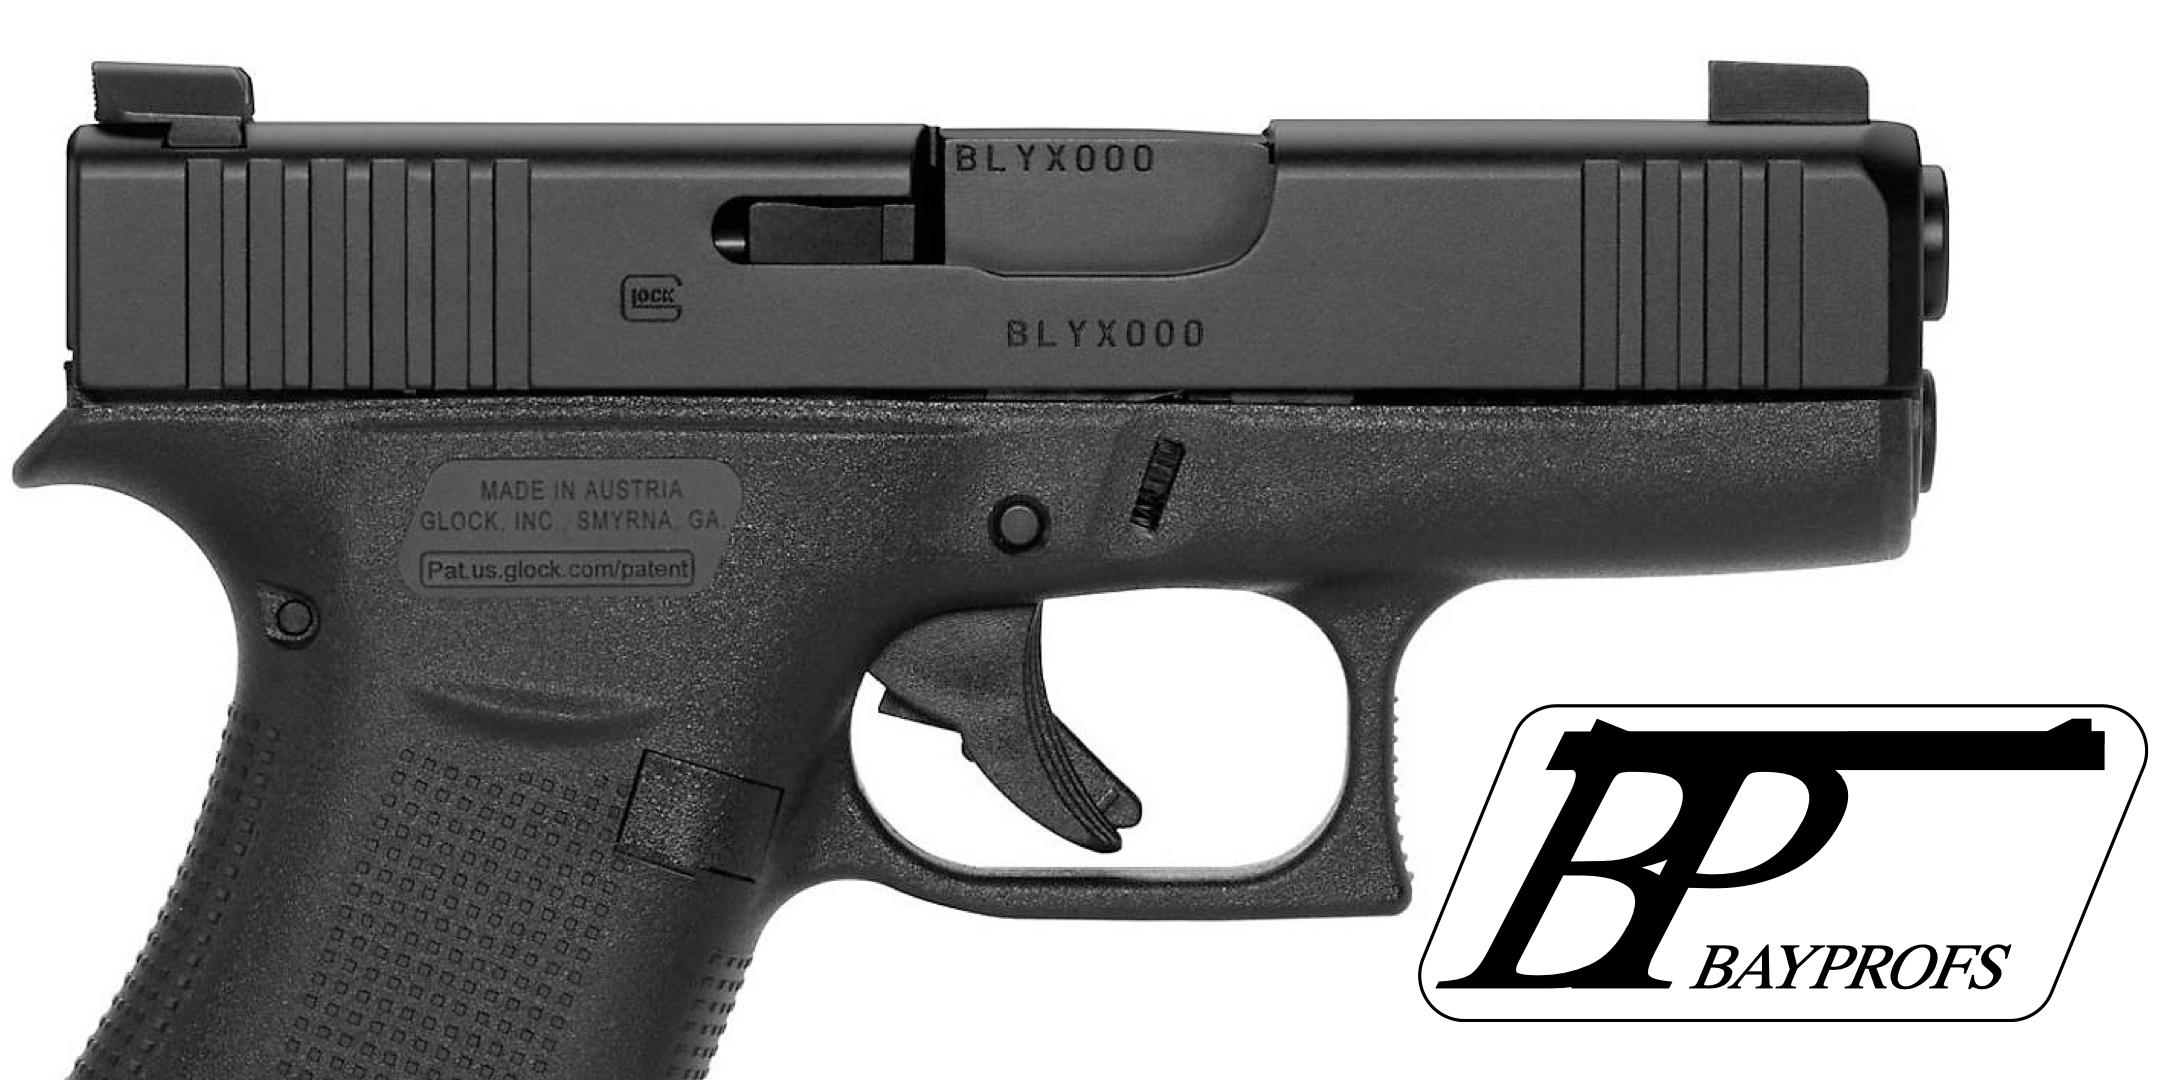 Bayprofs NRA Basics of Pistol Shooting Class